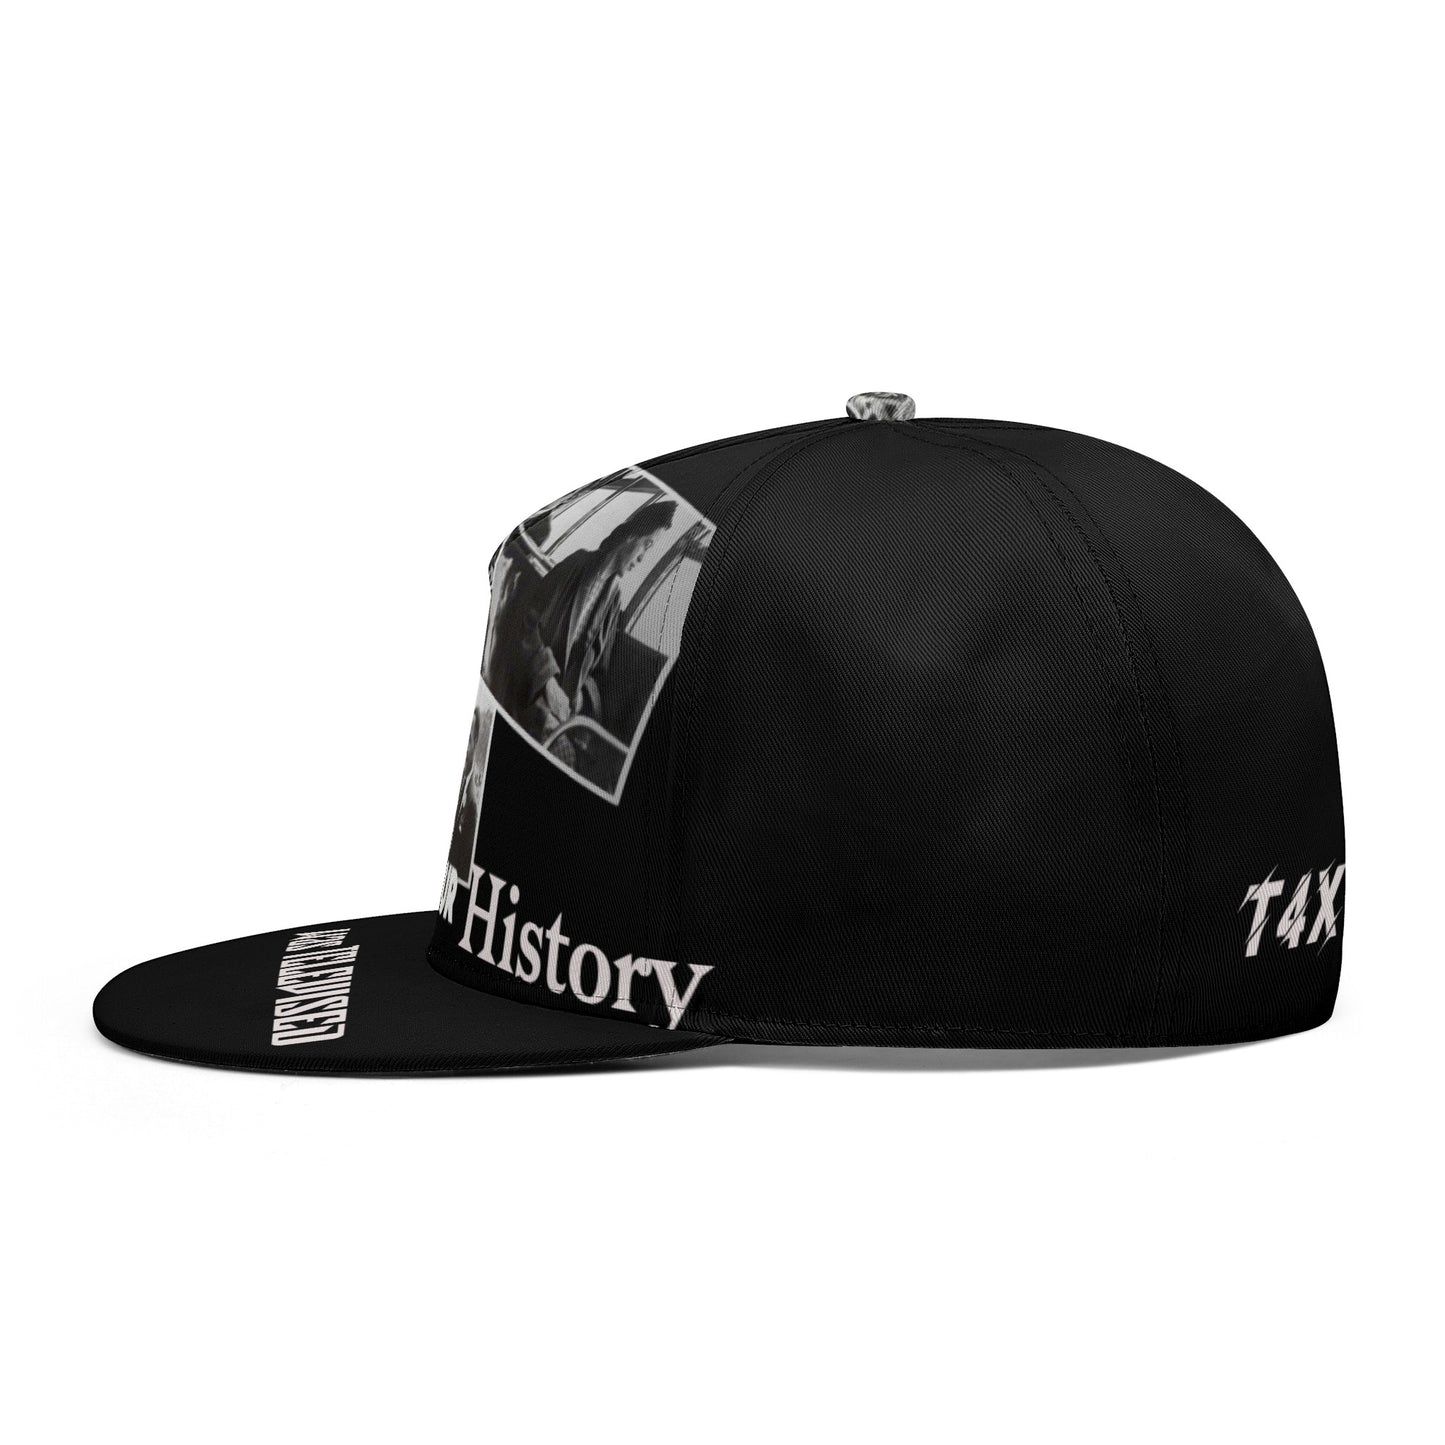 T4x Black History was Televised Hip-hop Caps